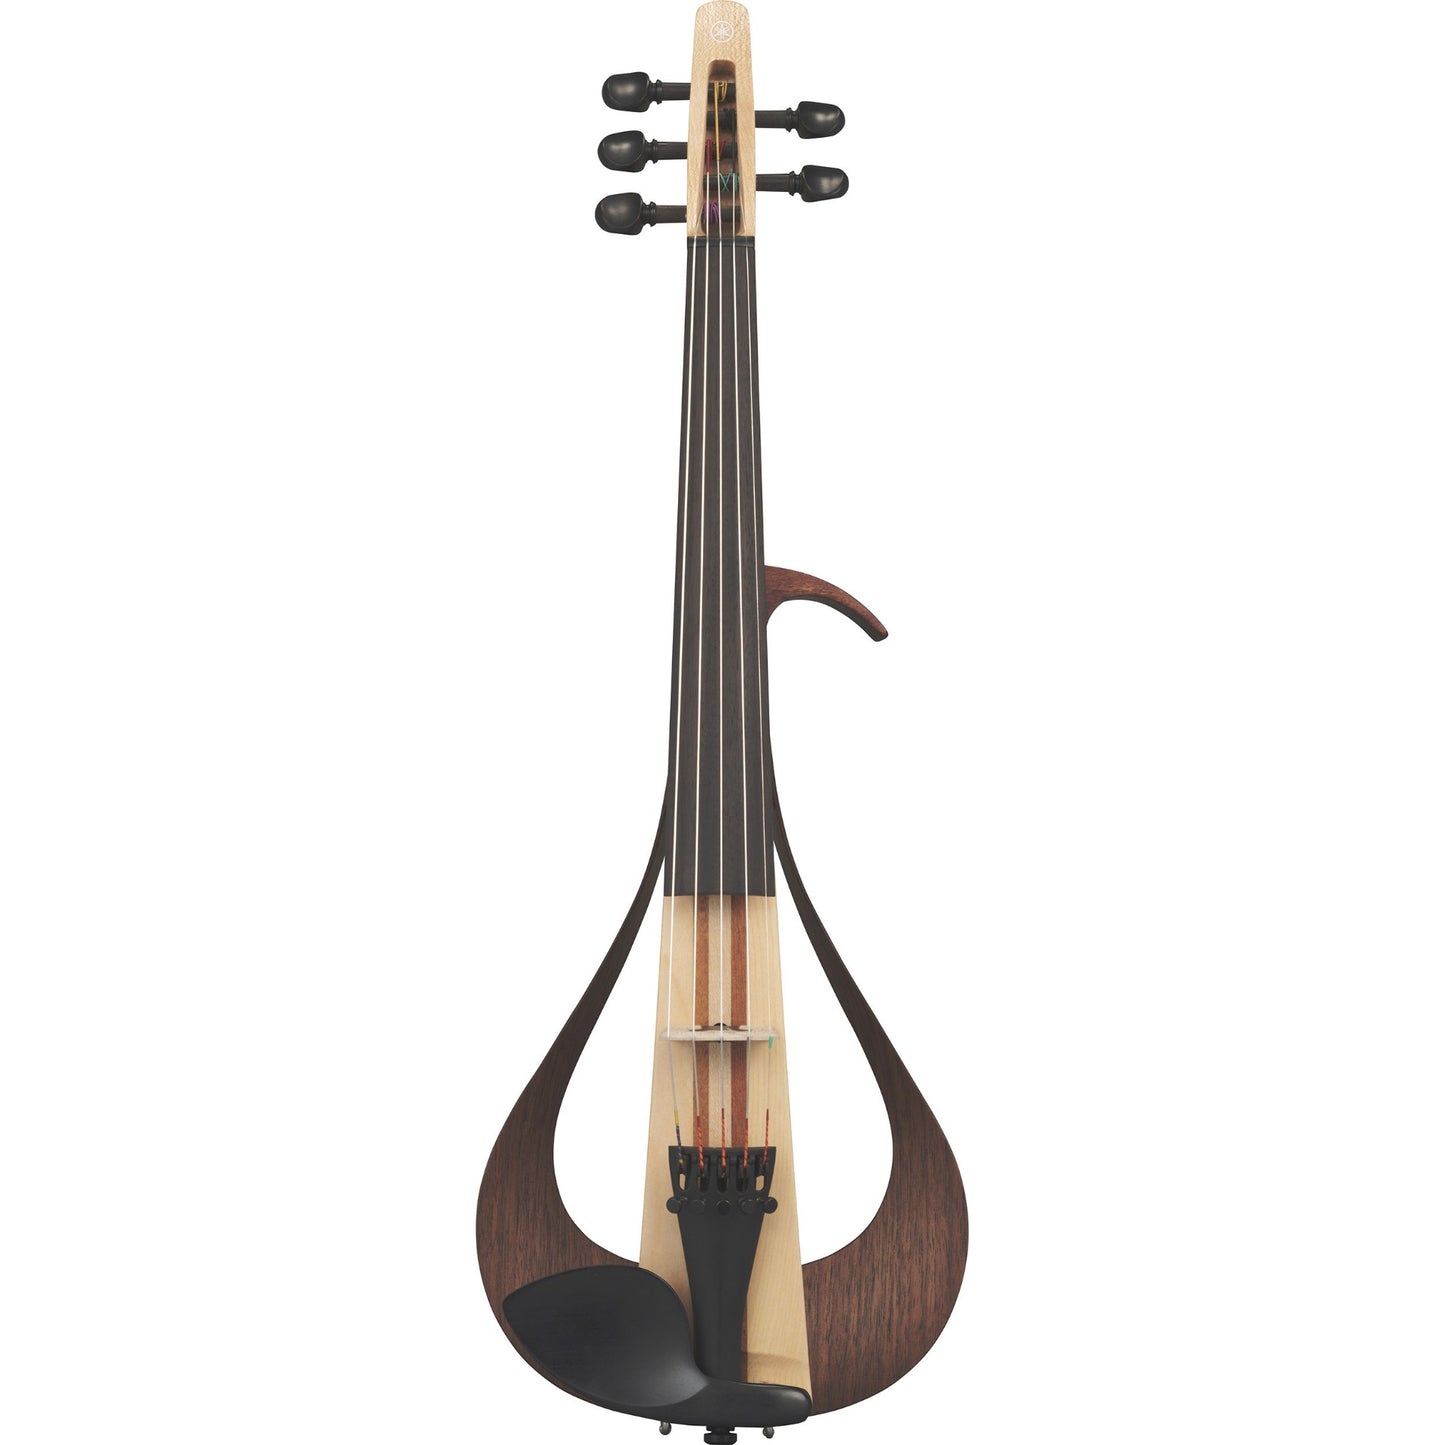 Yamaha YEV-104NT 4 string Electric Violin in a Natural Wood Finish